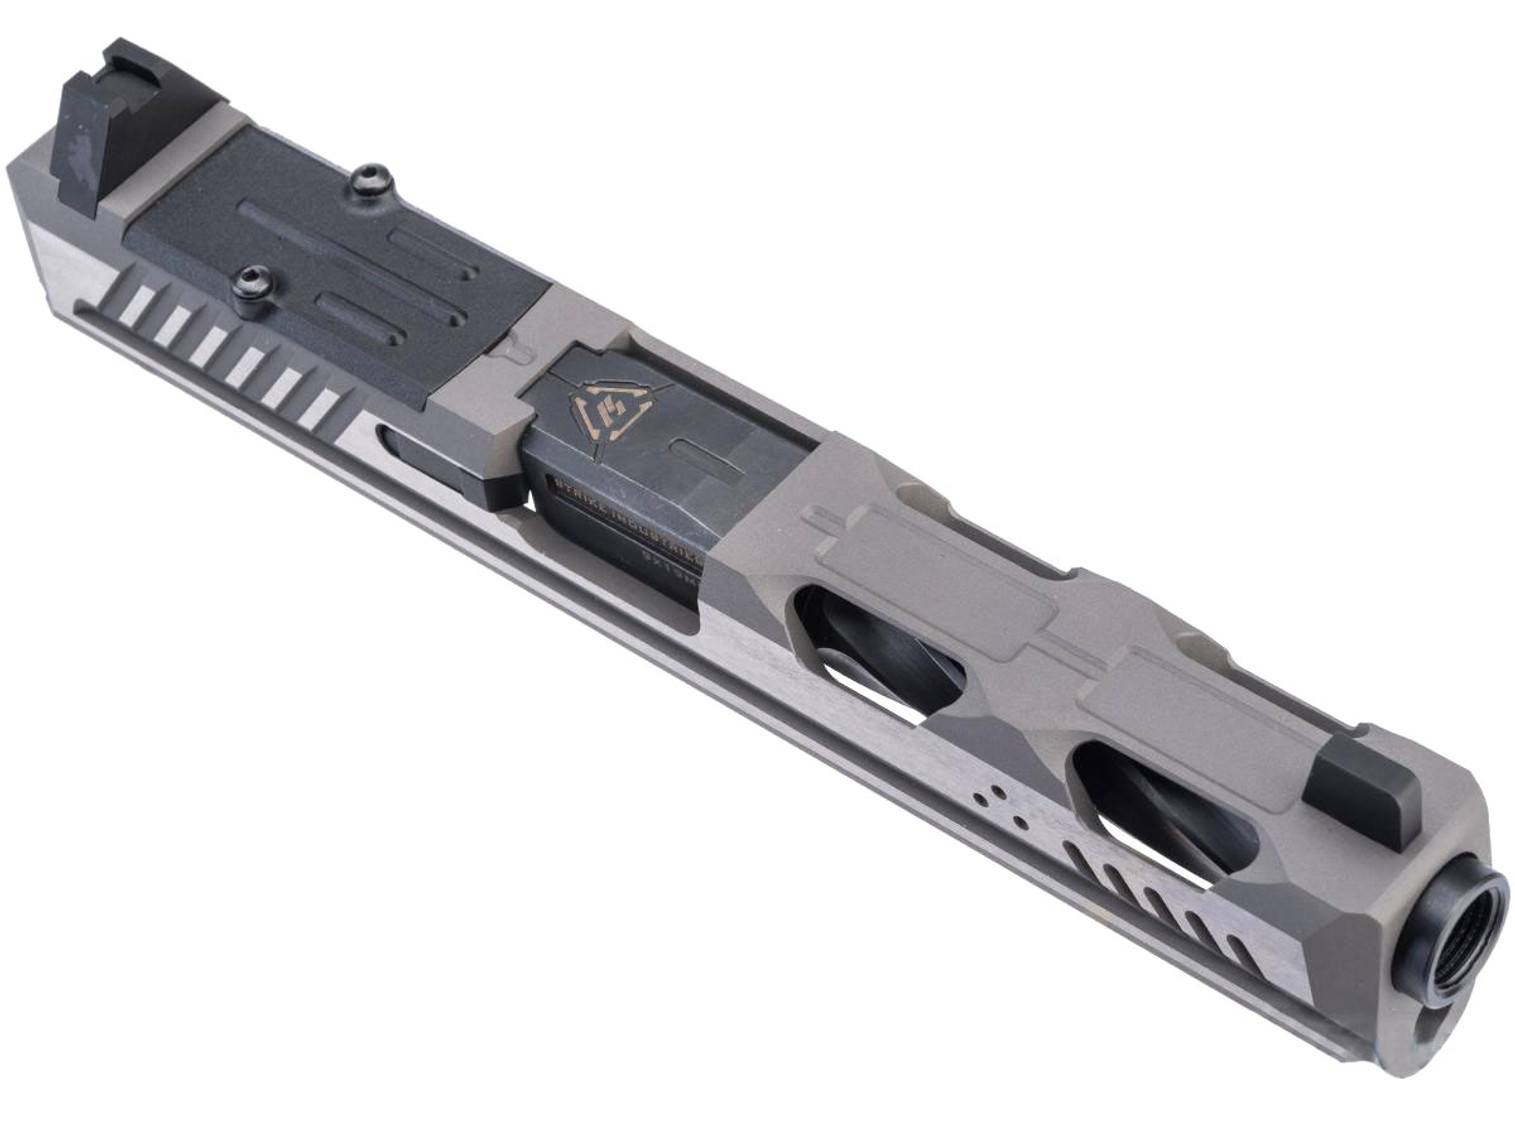 EMG Strike Industries Licensed ARK-17 Titanium Slide Set for EMG/Salient Arms International BLU Full Size Gas Blowback Airsoft Pistols